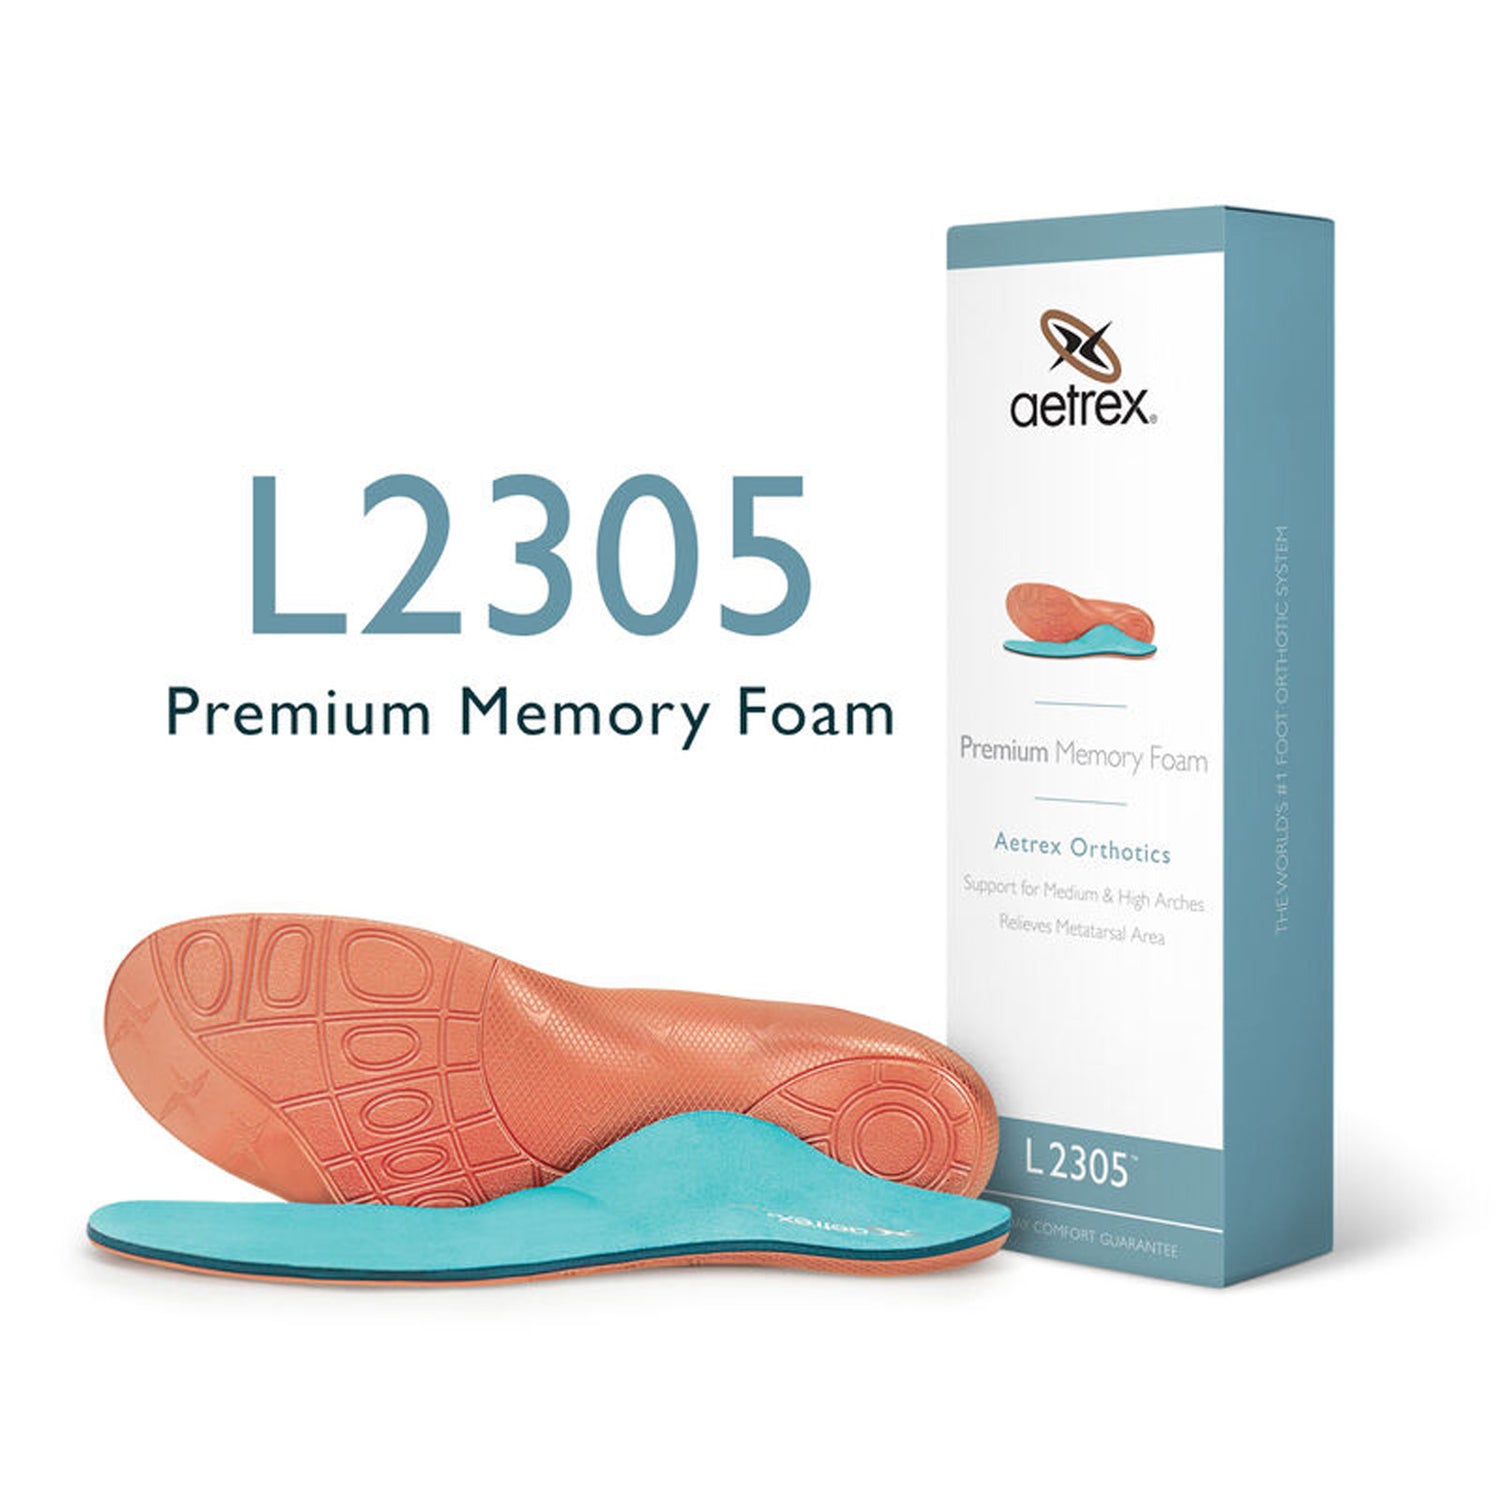 Peltz Shoes  Men's Aetrex Premium Memory Foam Orthotics with Metatarsal Support BROWN L2305M